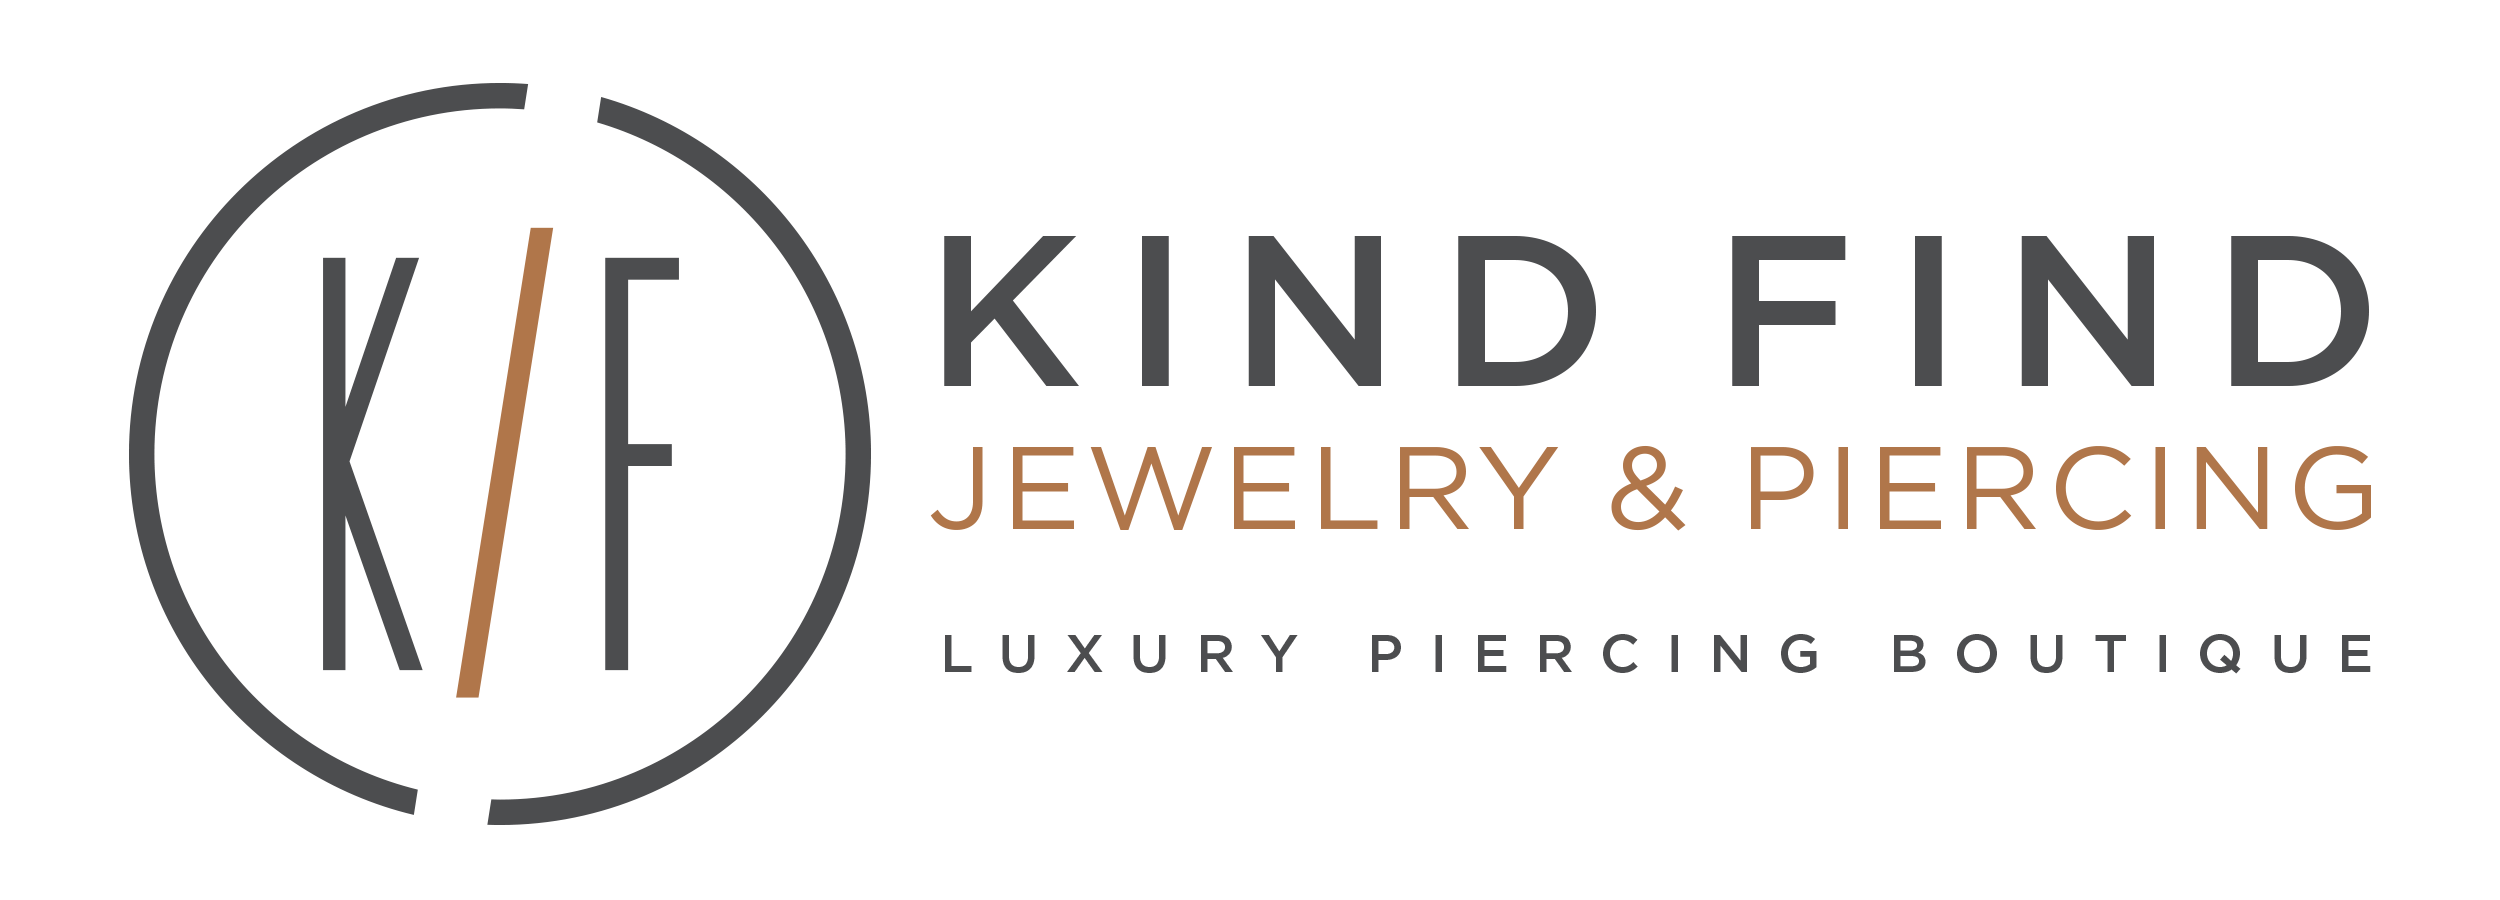 Kind Find Jewelry& Piercing